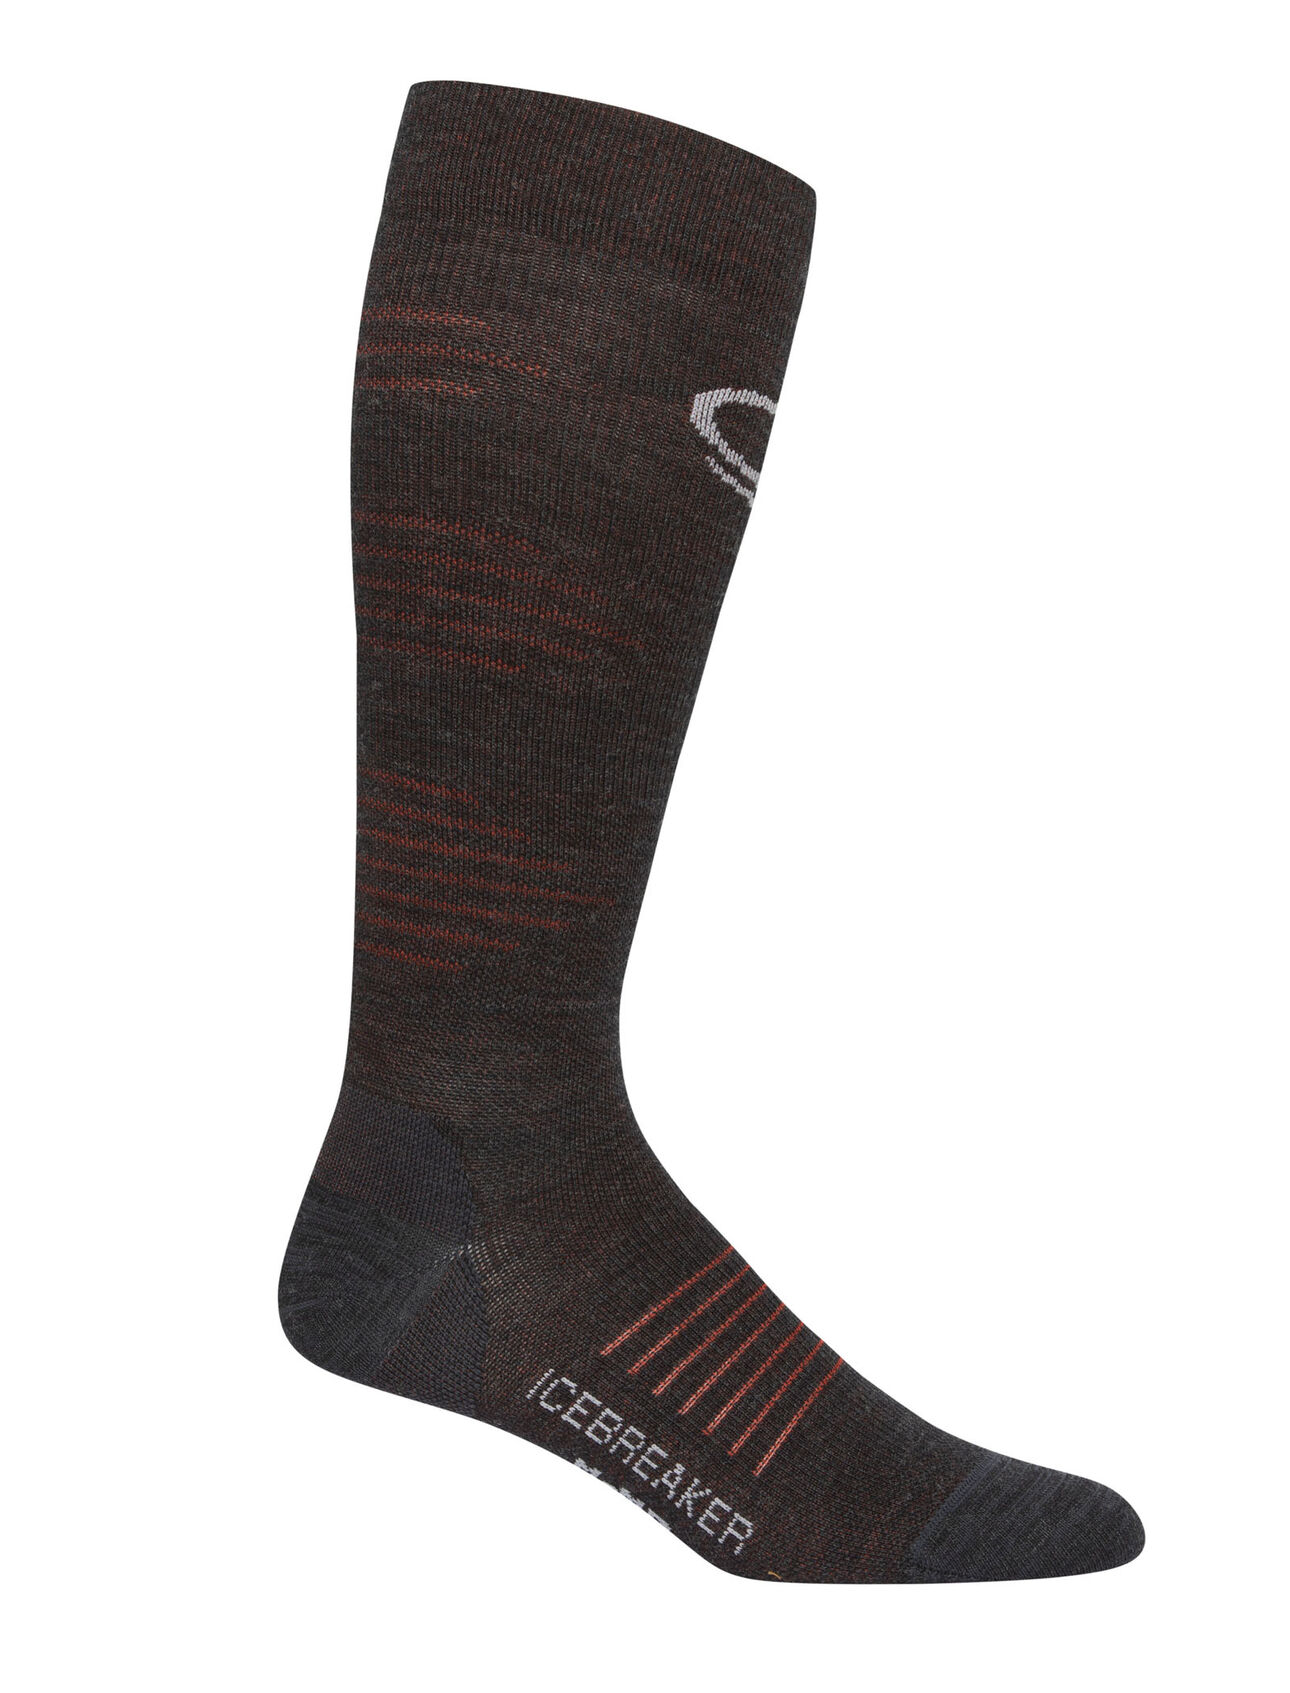 Merino Ski+ Compression Ultralight Over the Calf Socks